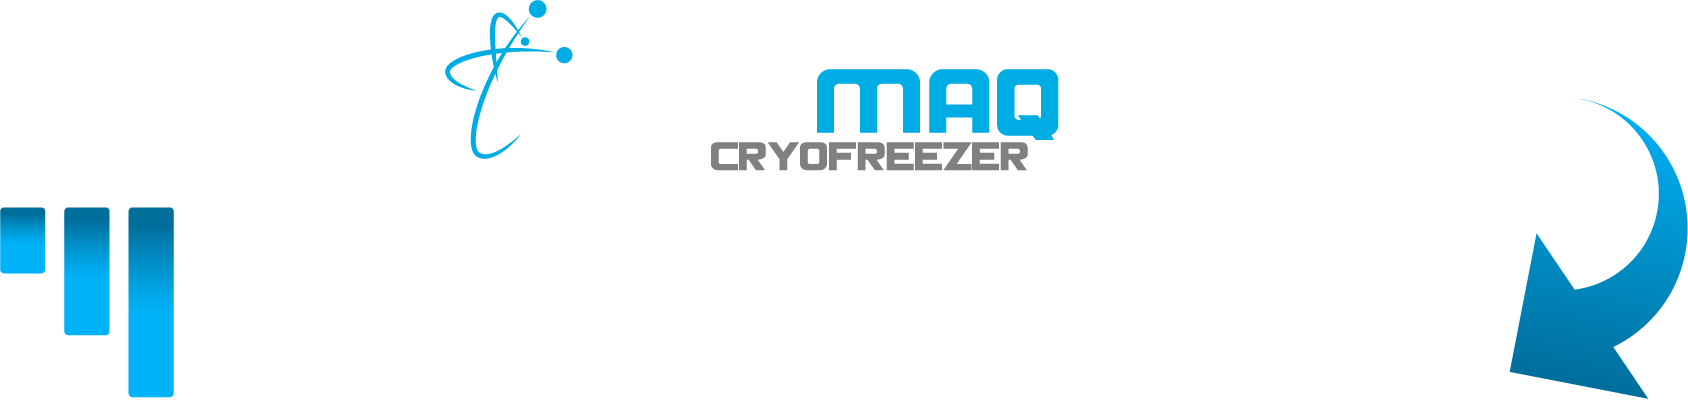 Cryogenics - Tectalmaq